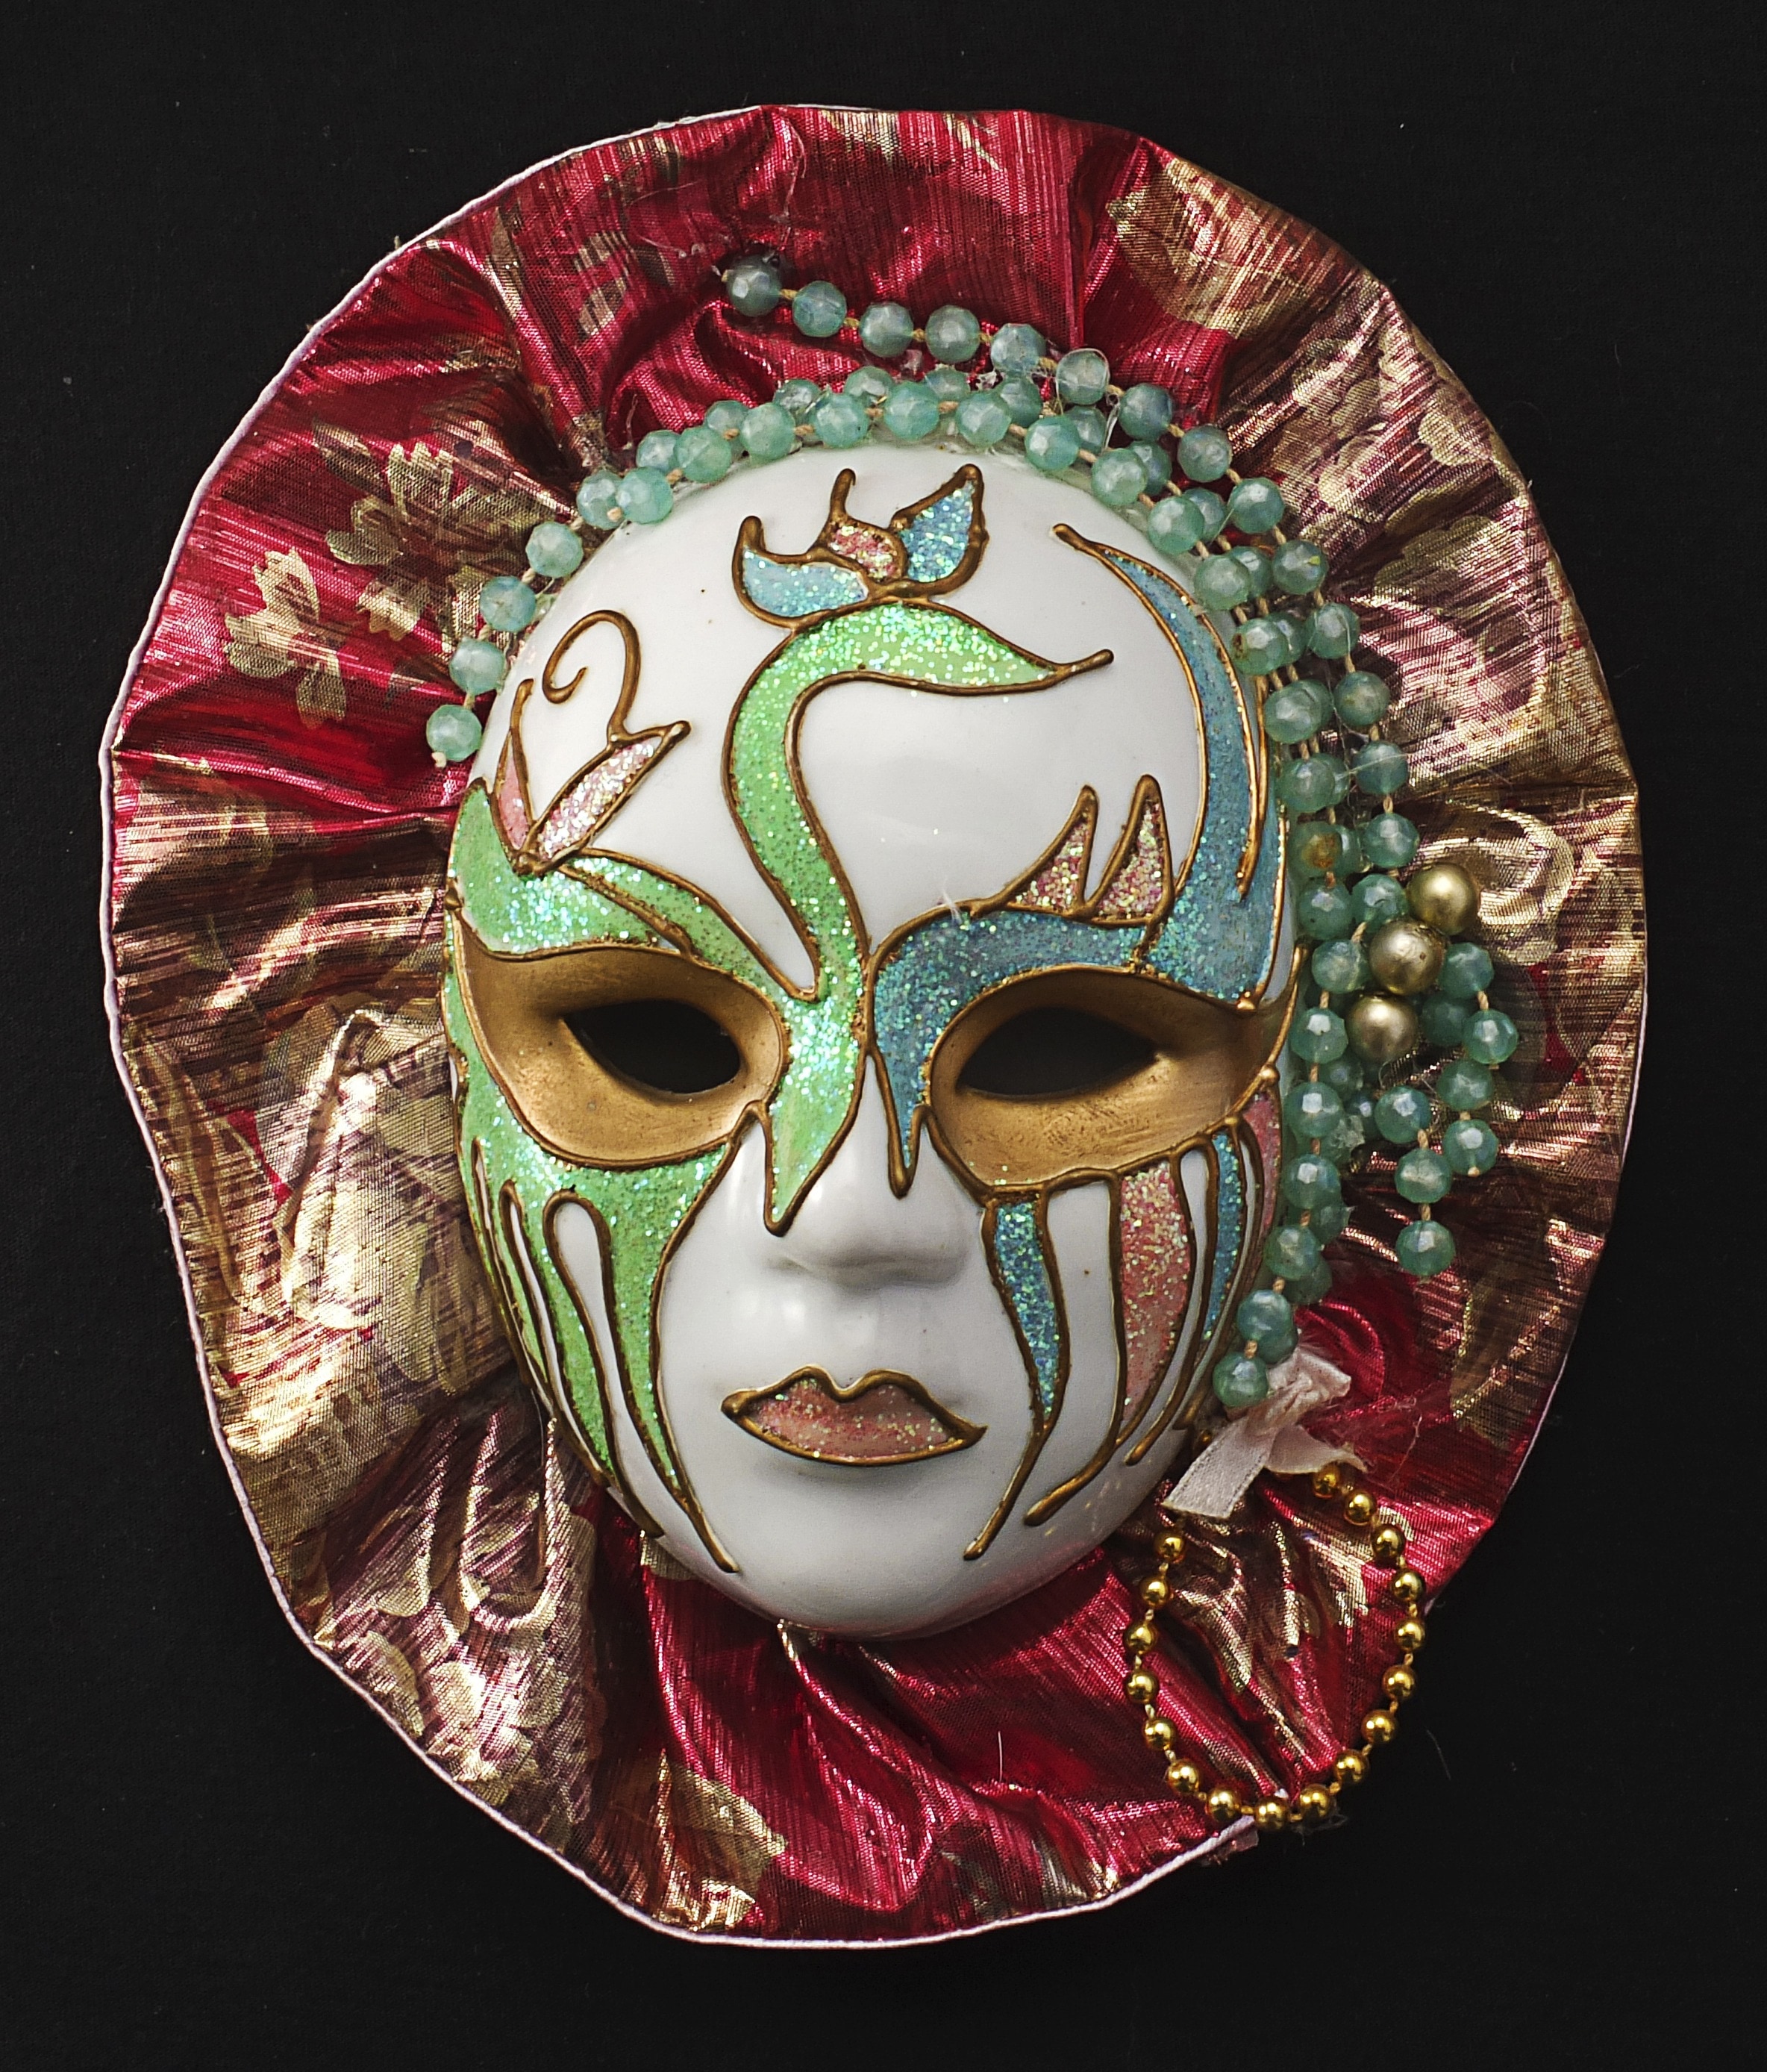 Carnival, Female, Mask, Porcelain, Hide, mask - disguise, costume